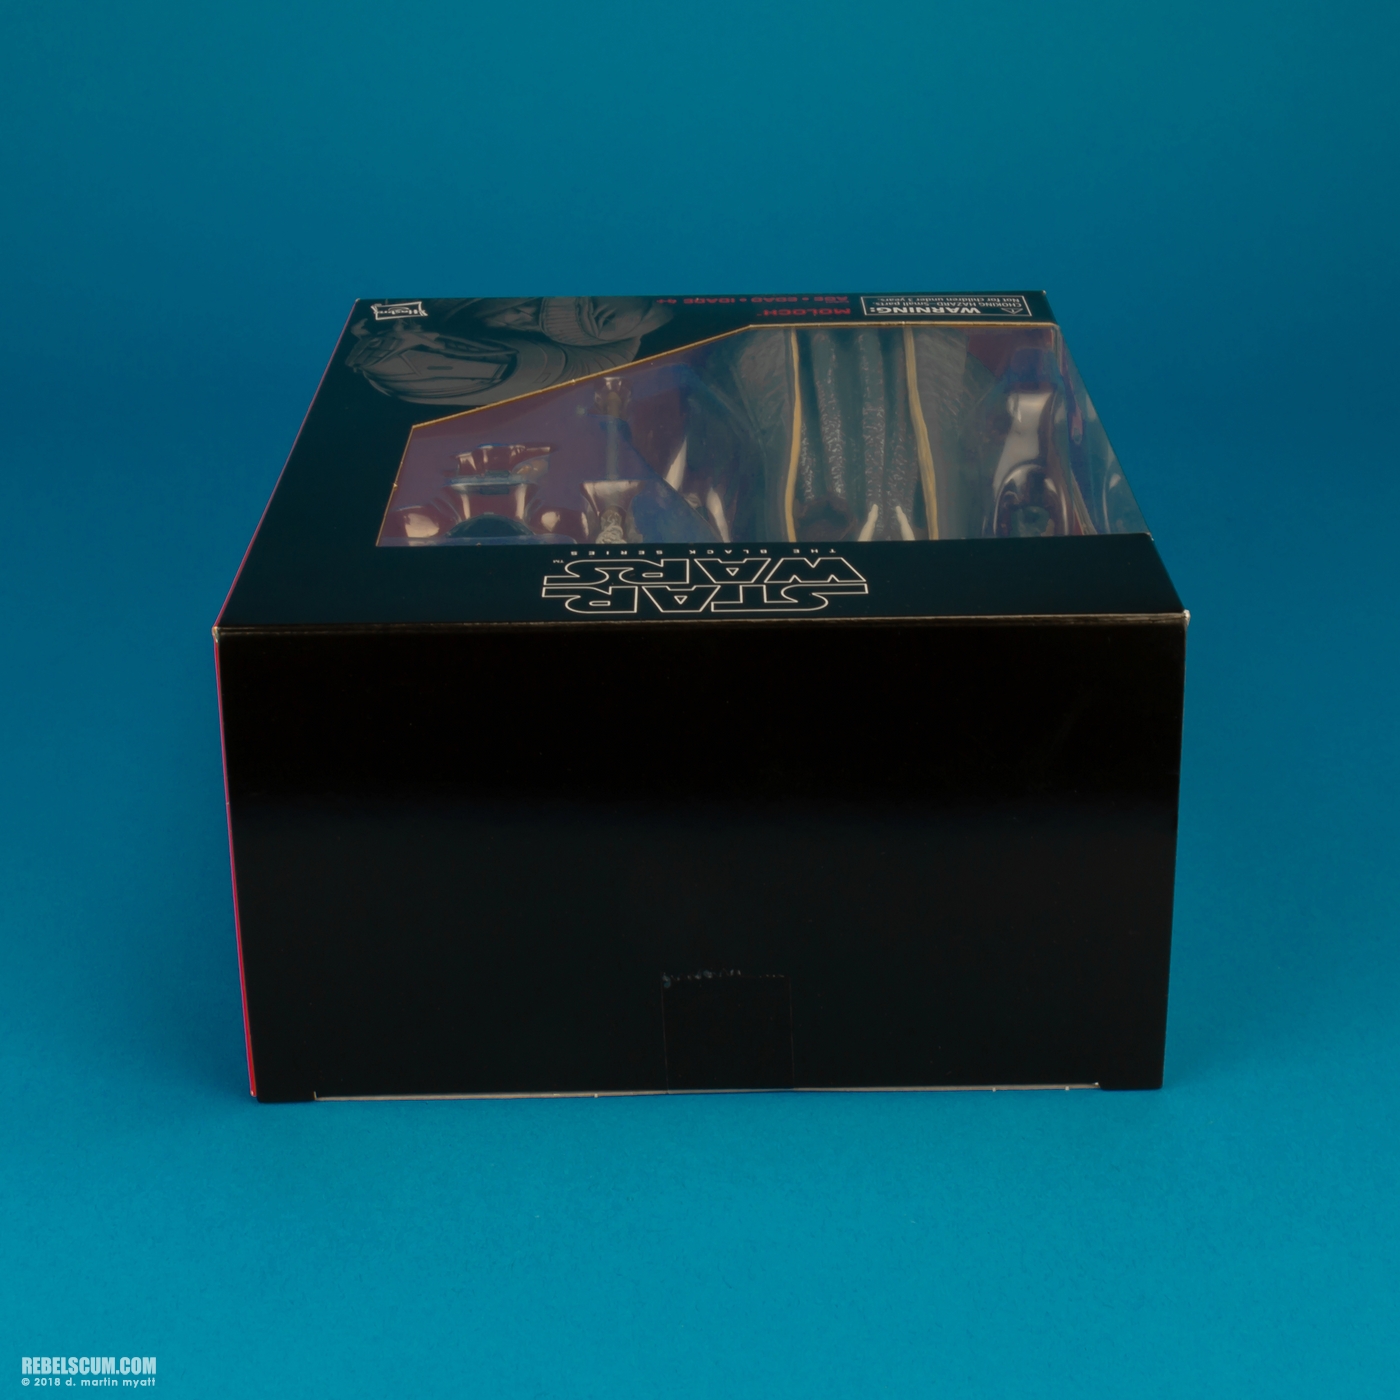 Moloch-E2821-Hasbro-Star-Wars-The-Black-Series-6-inch-figure-017.jpg